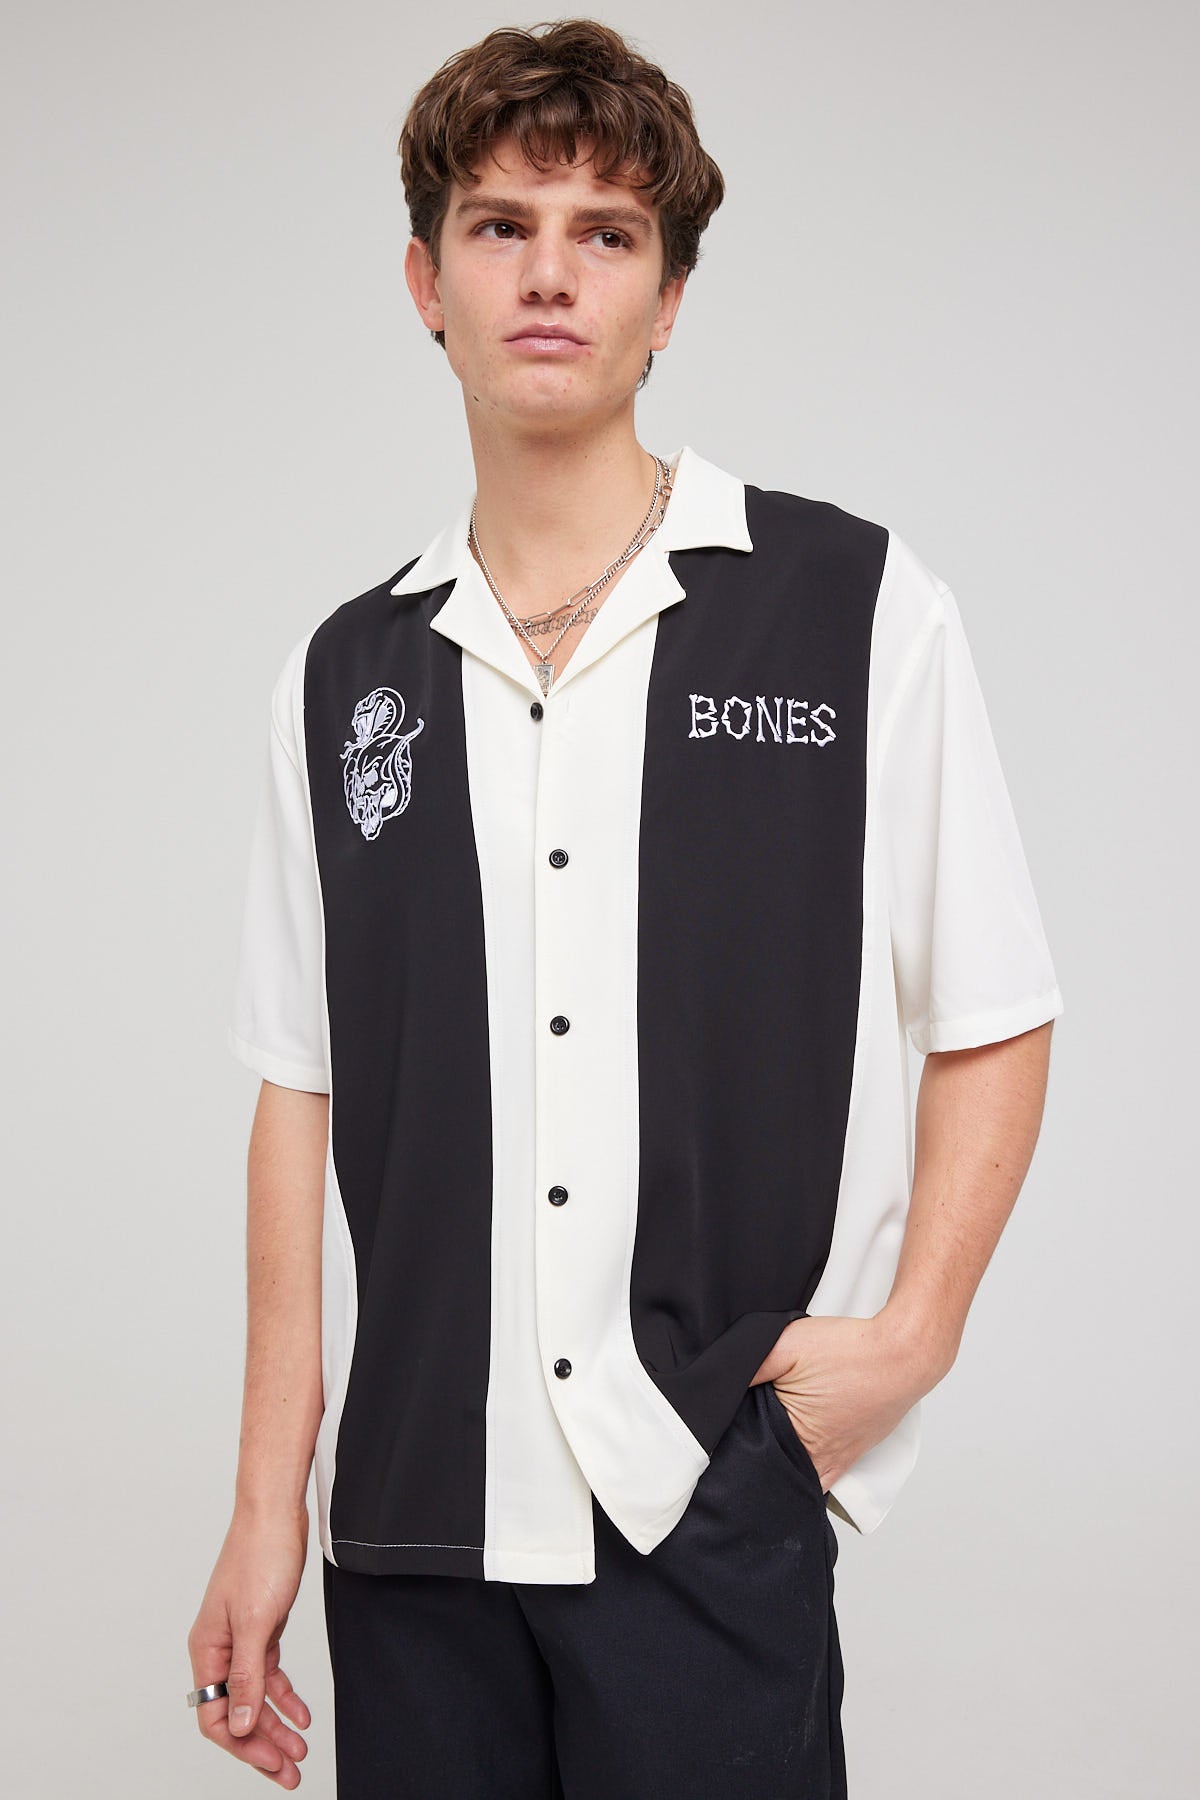 Billy Bones Club Skull Bowlo Shirt White